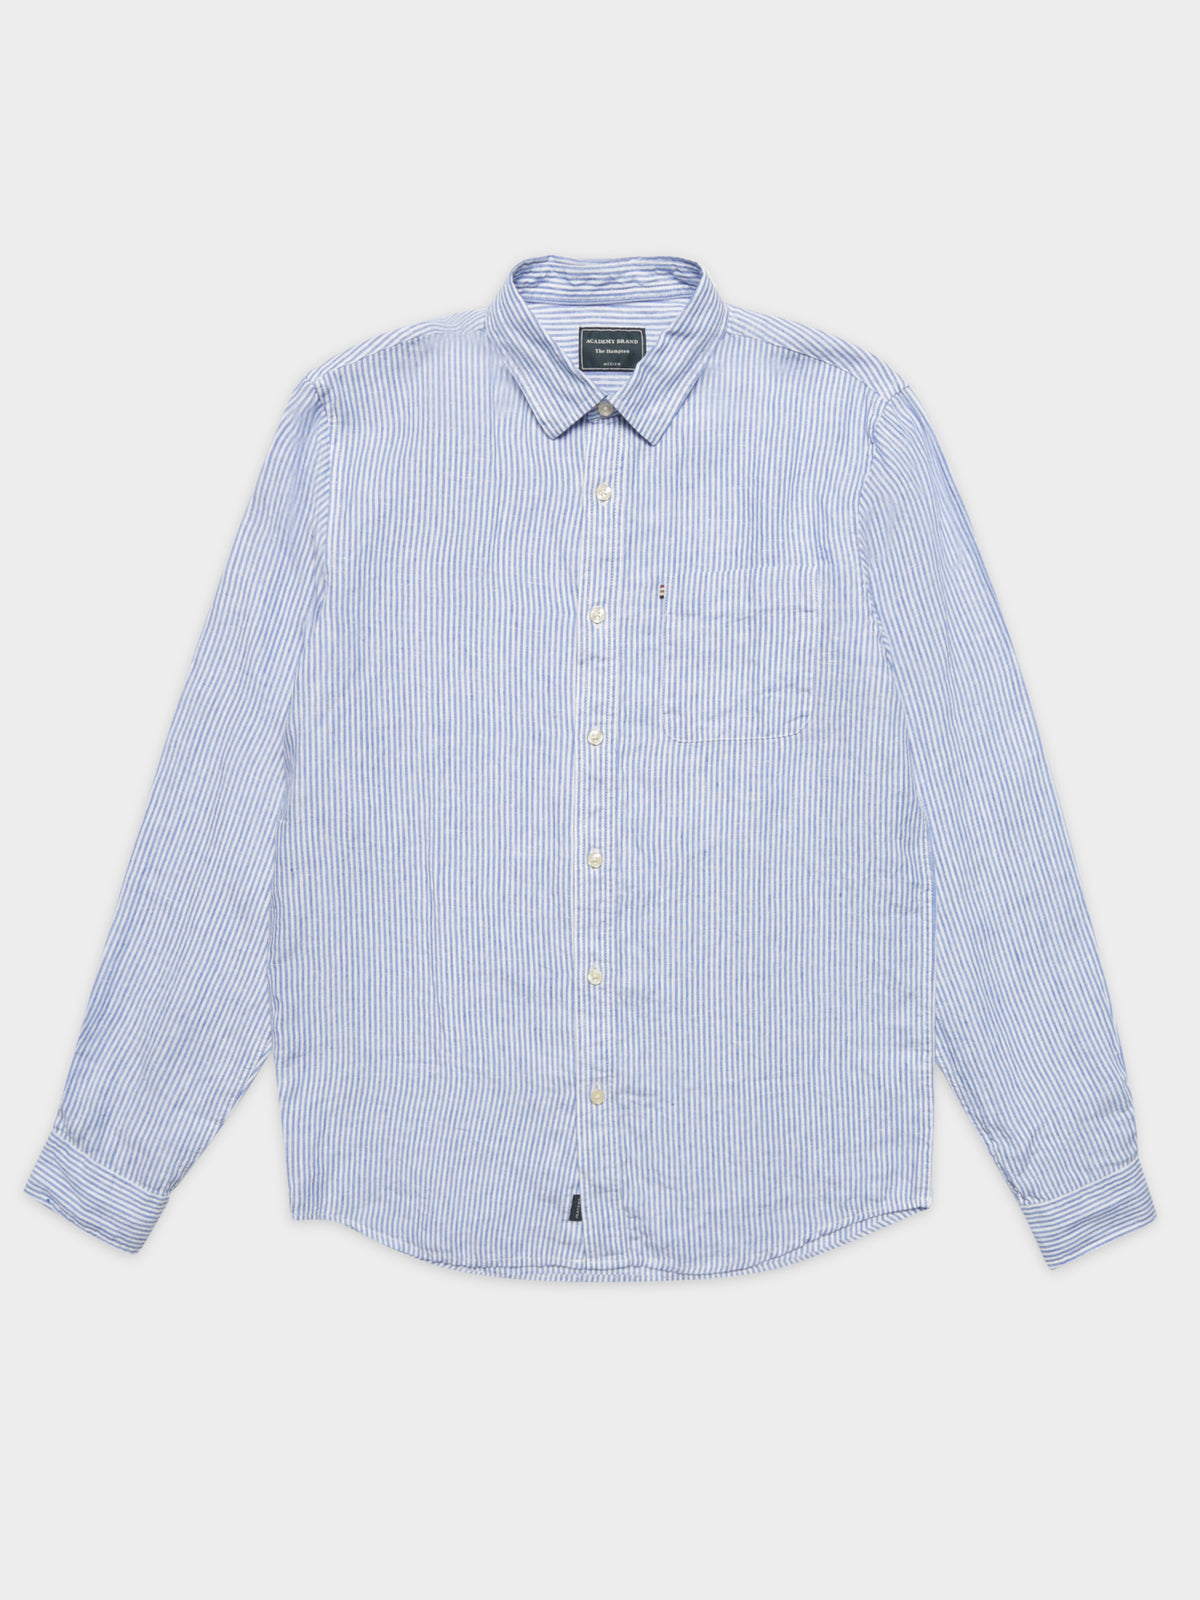 Hampton Long Sleeve Linen Shirt in Sky Stripe